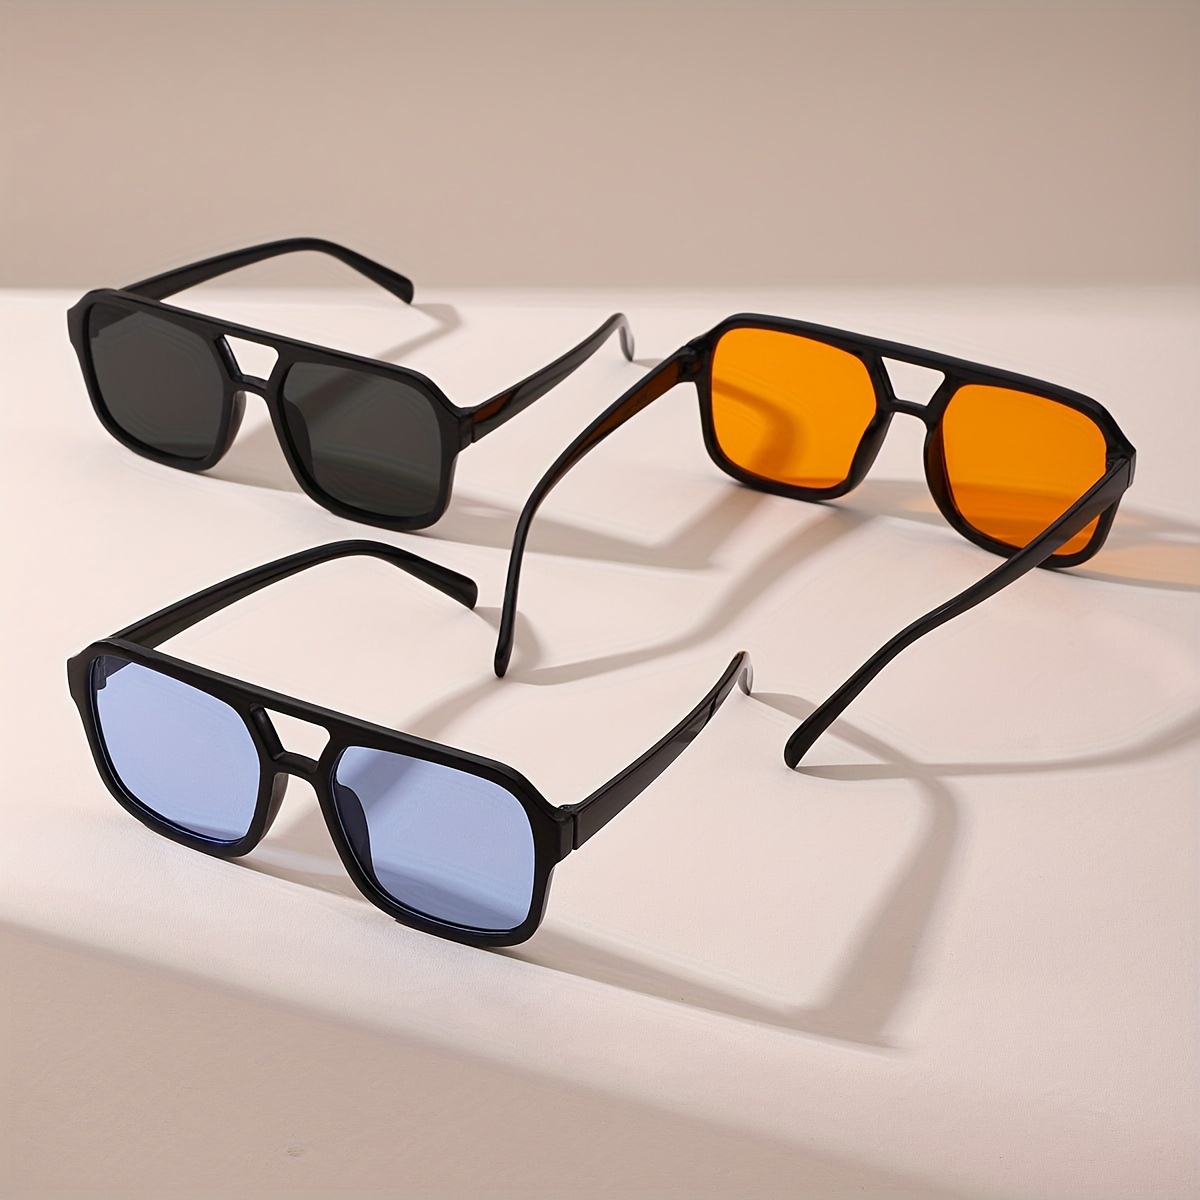 Double Beam Fashion Glasses For Women Men Anti Glare Sun Shades Glasses For Driving Beach Travel